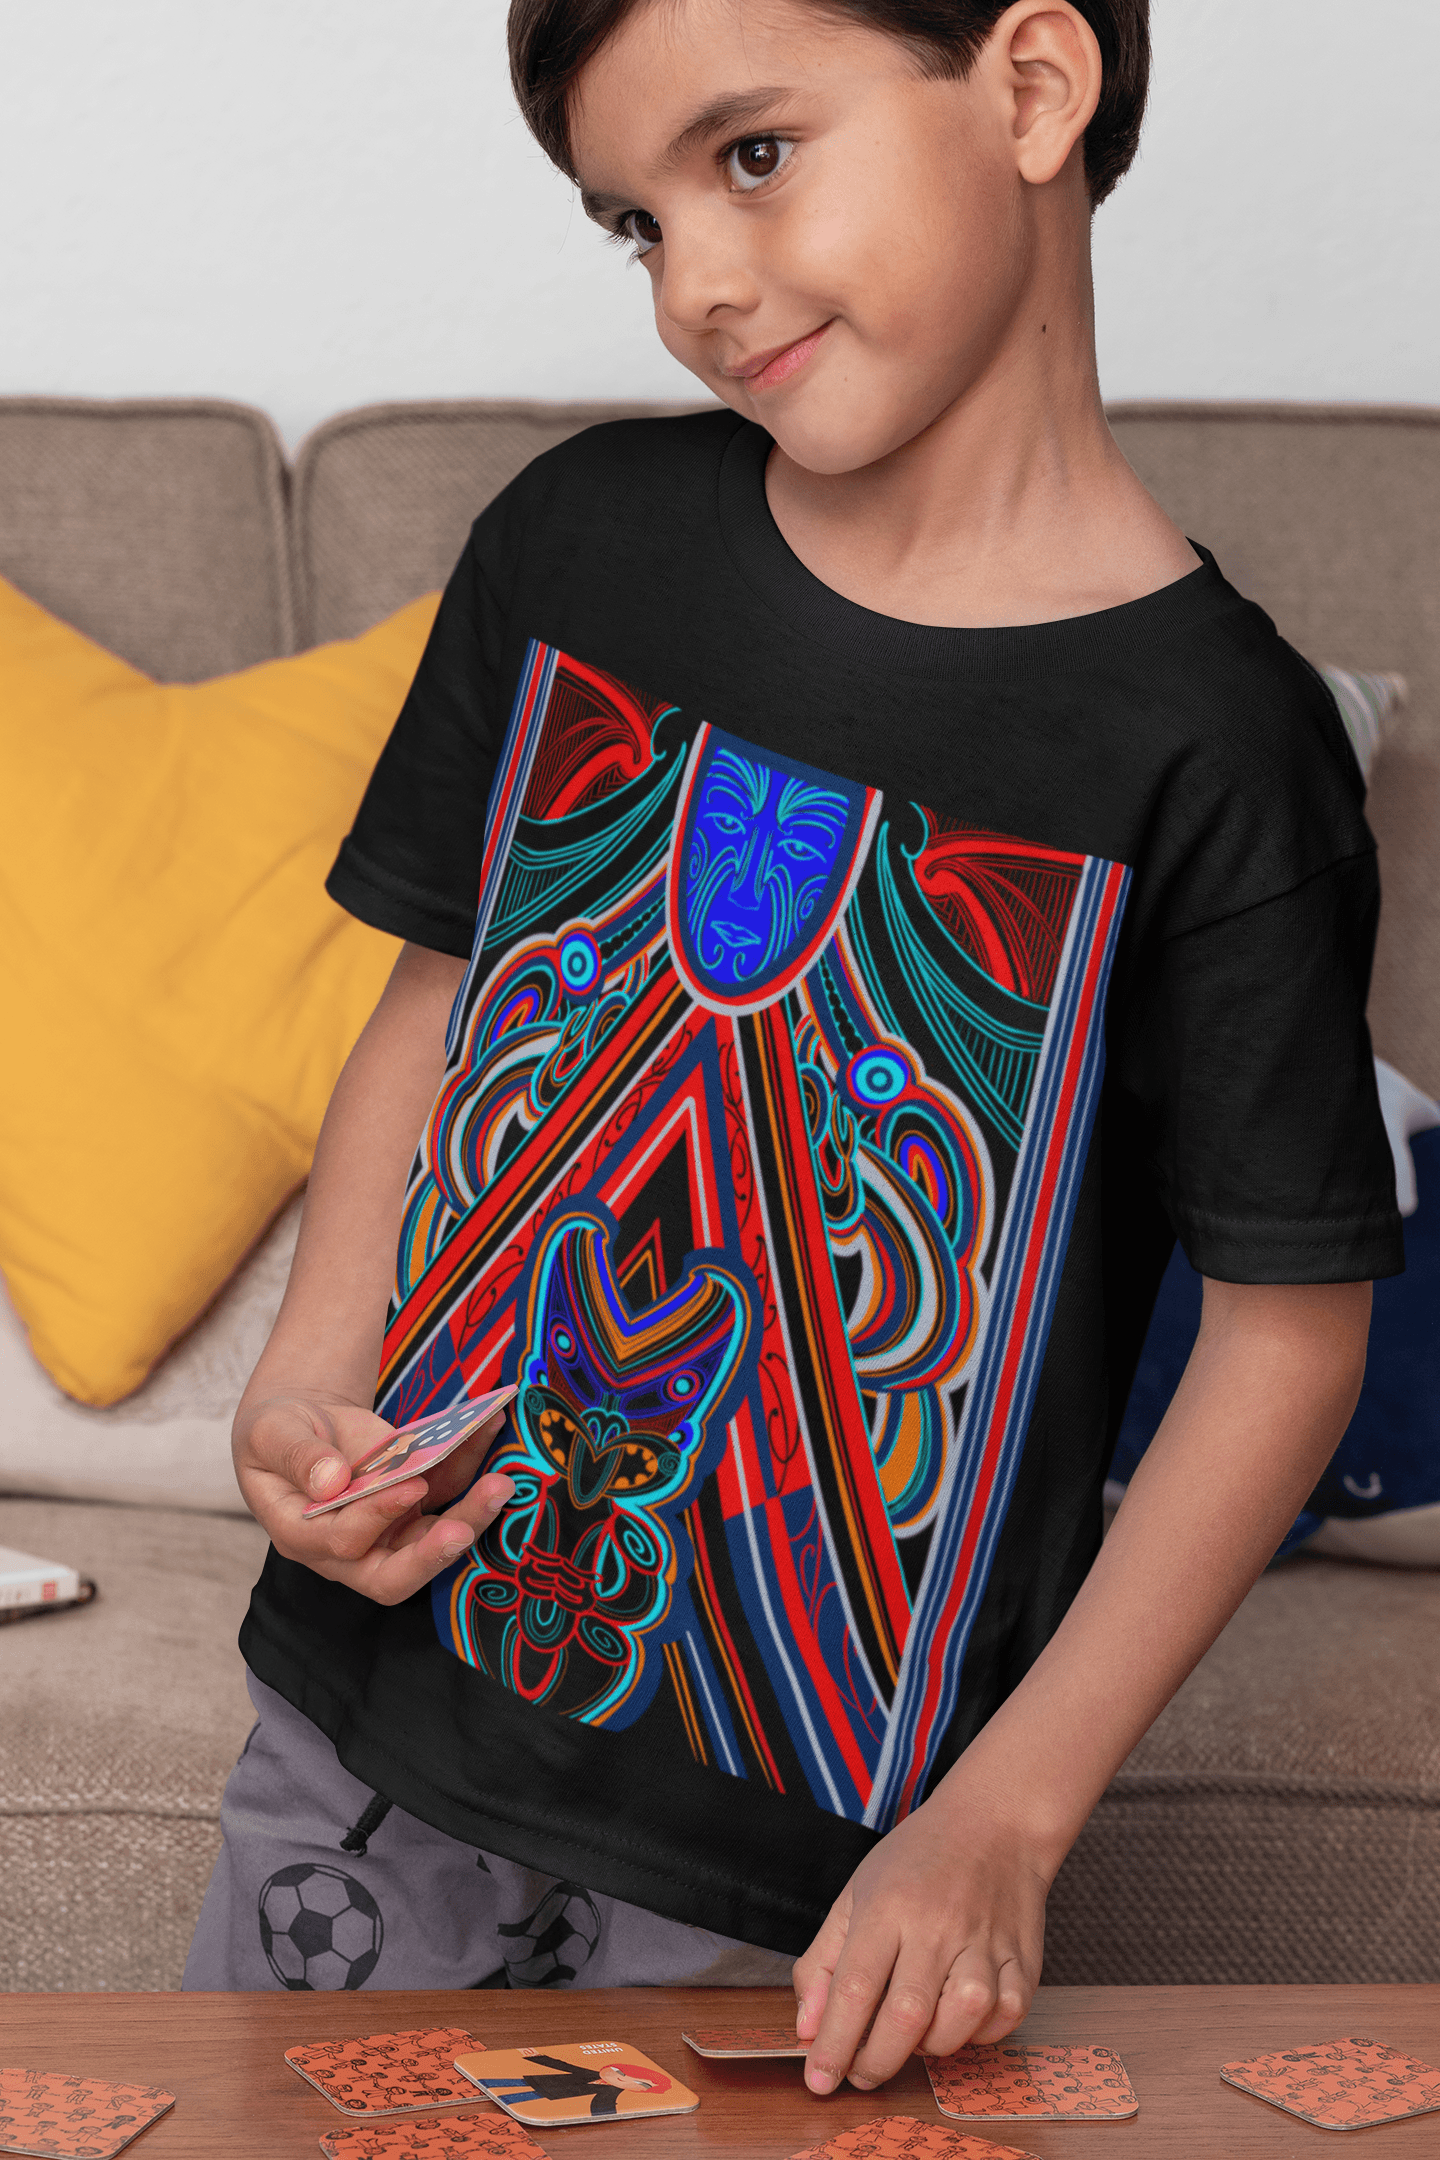 Rūaumoko - Childrens T-shirt - River Jayden Art